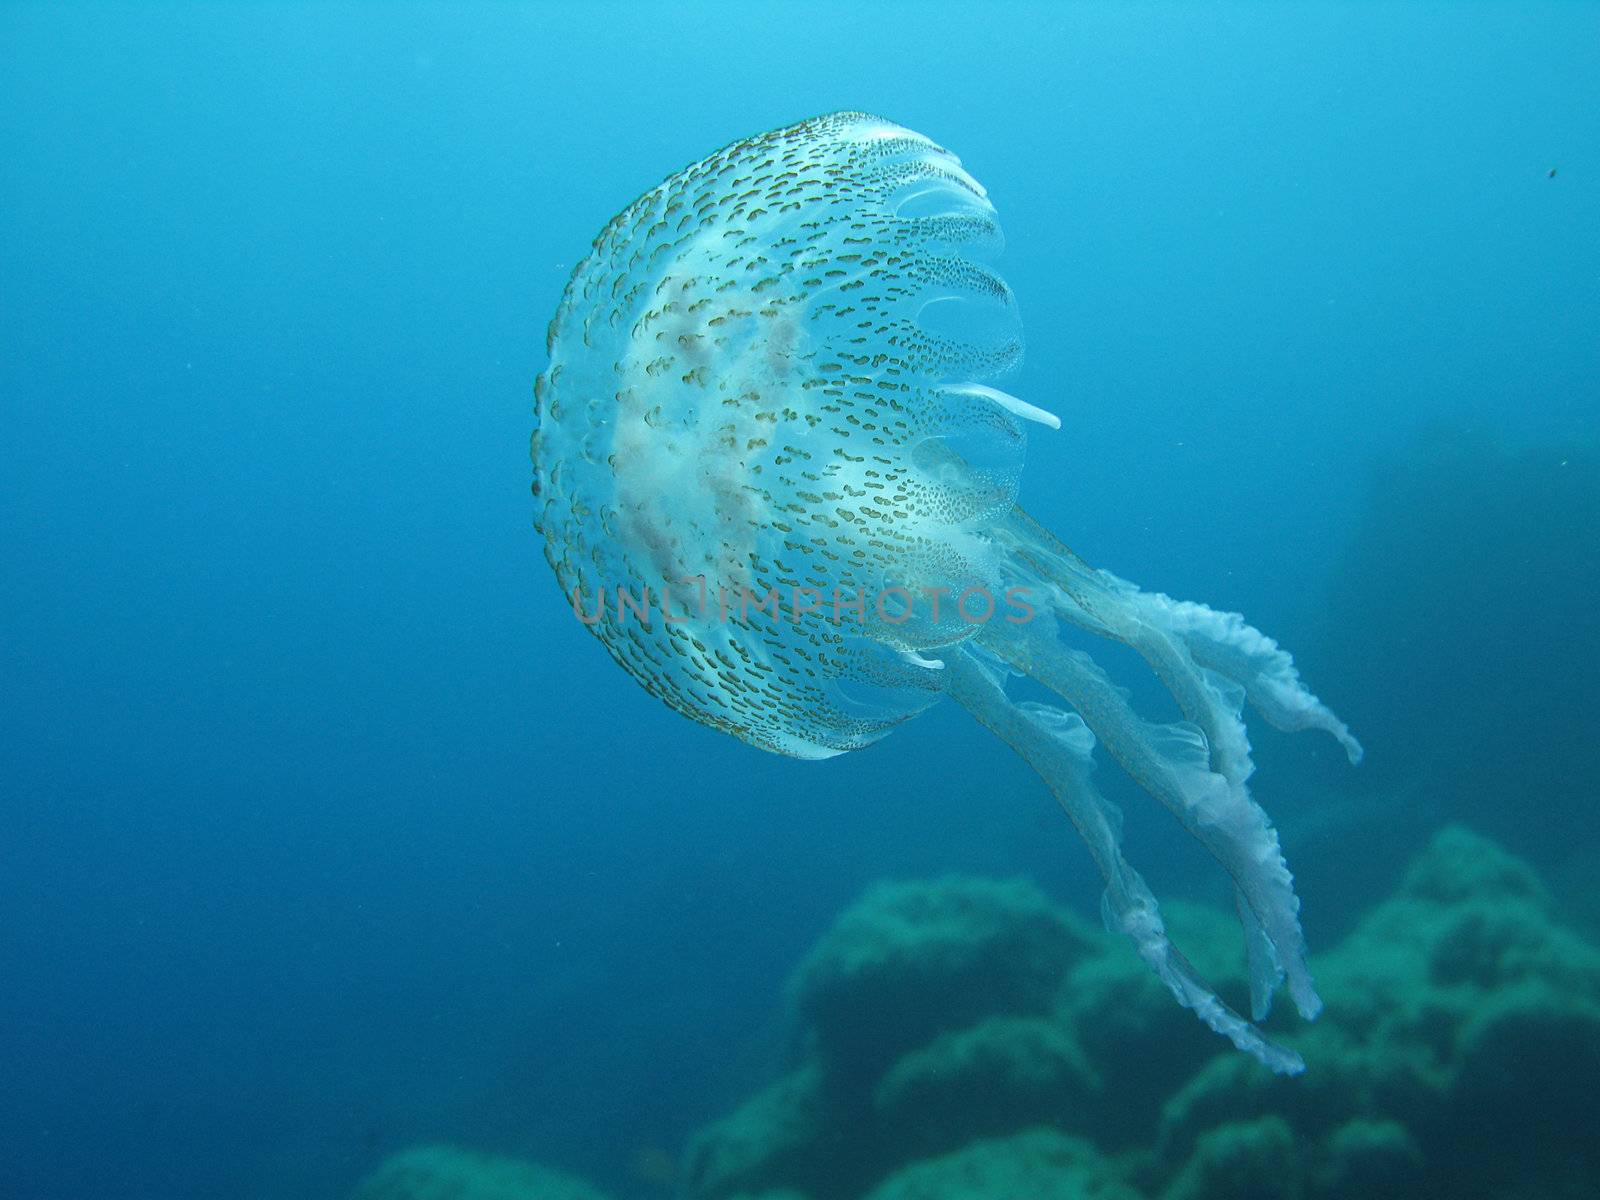 "Nocticula Pelagia" Jellyfish in Mediterranean Sea.